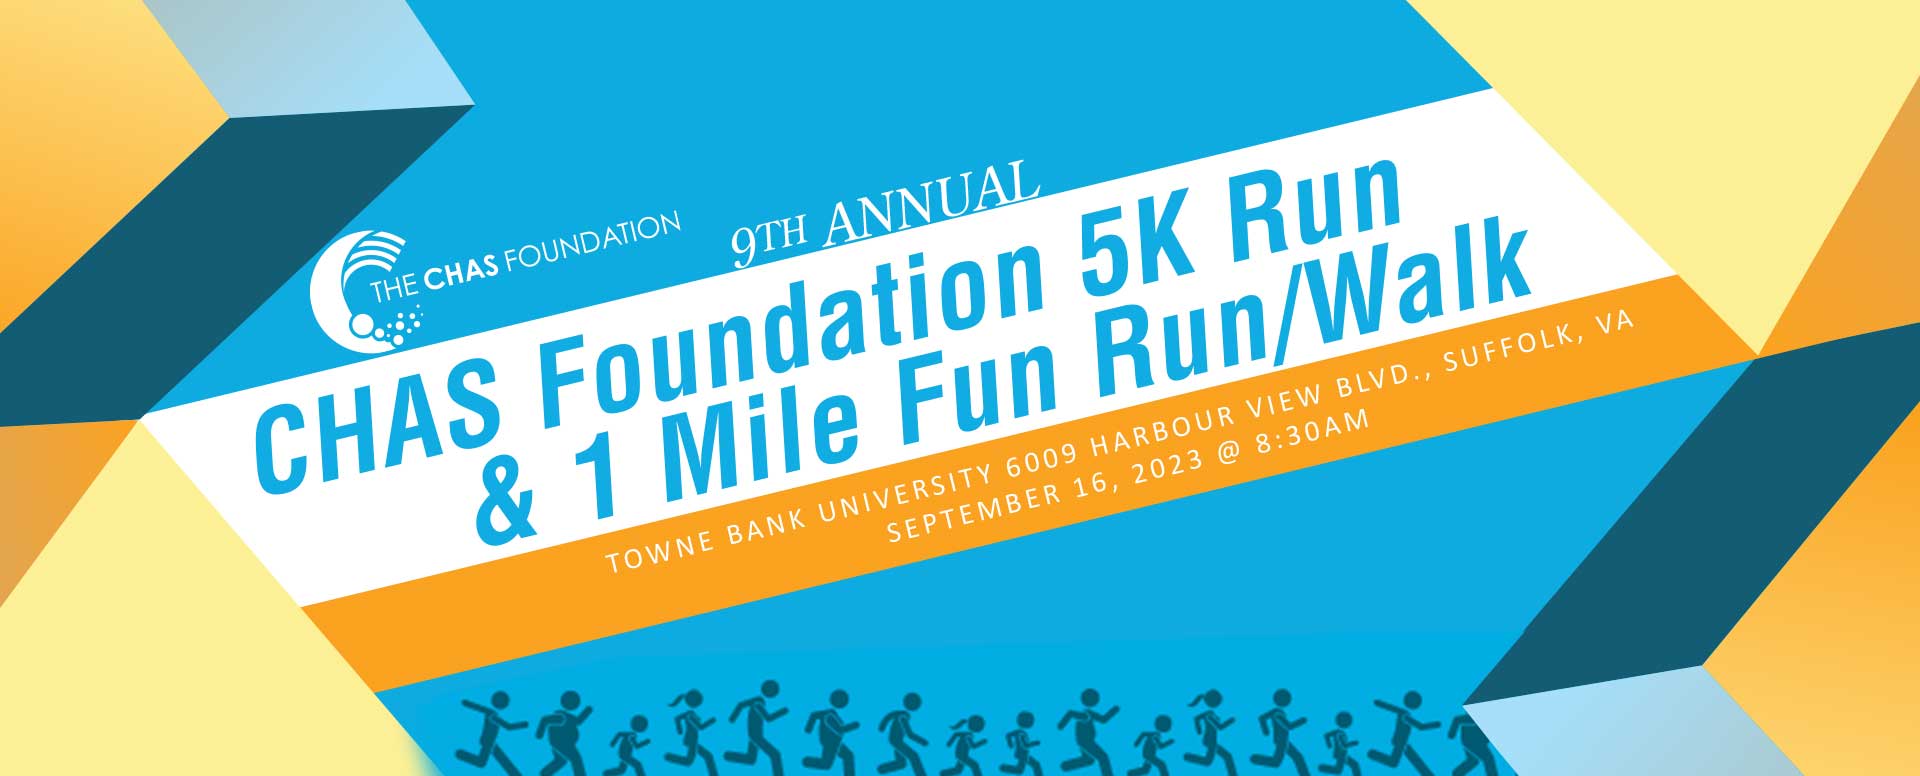 9th Annual CHAS Foundation 5K Run and 1 Mile Fun Run/Walk